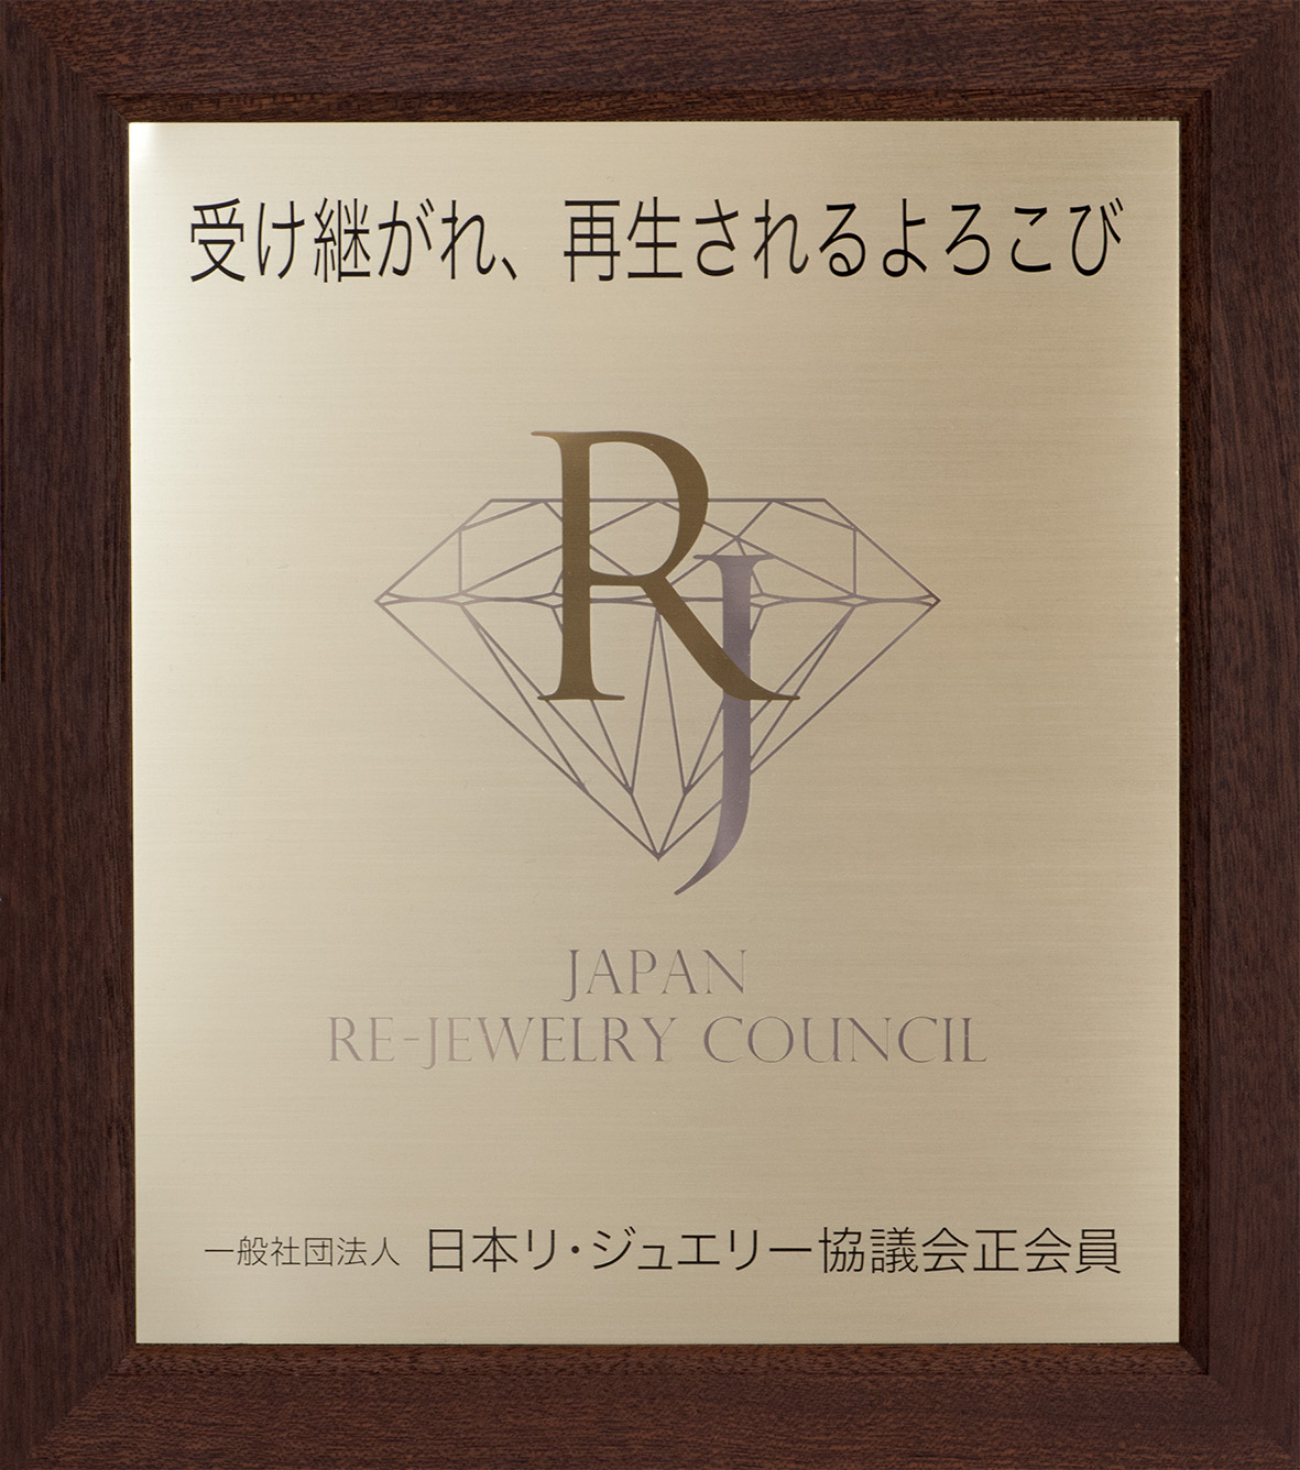 一般社団法人日本リ･ジュエリー協議会